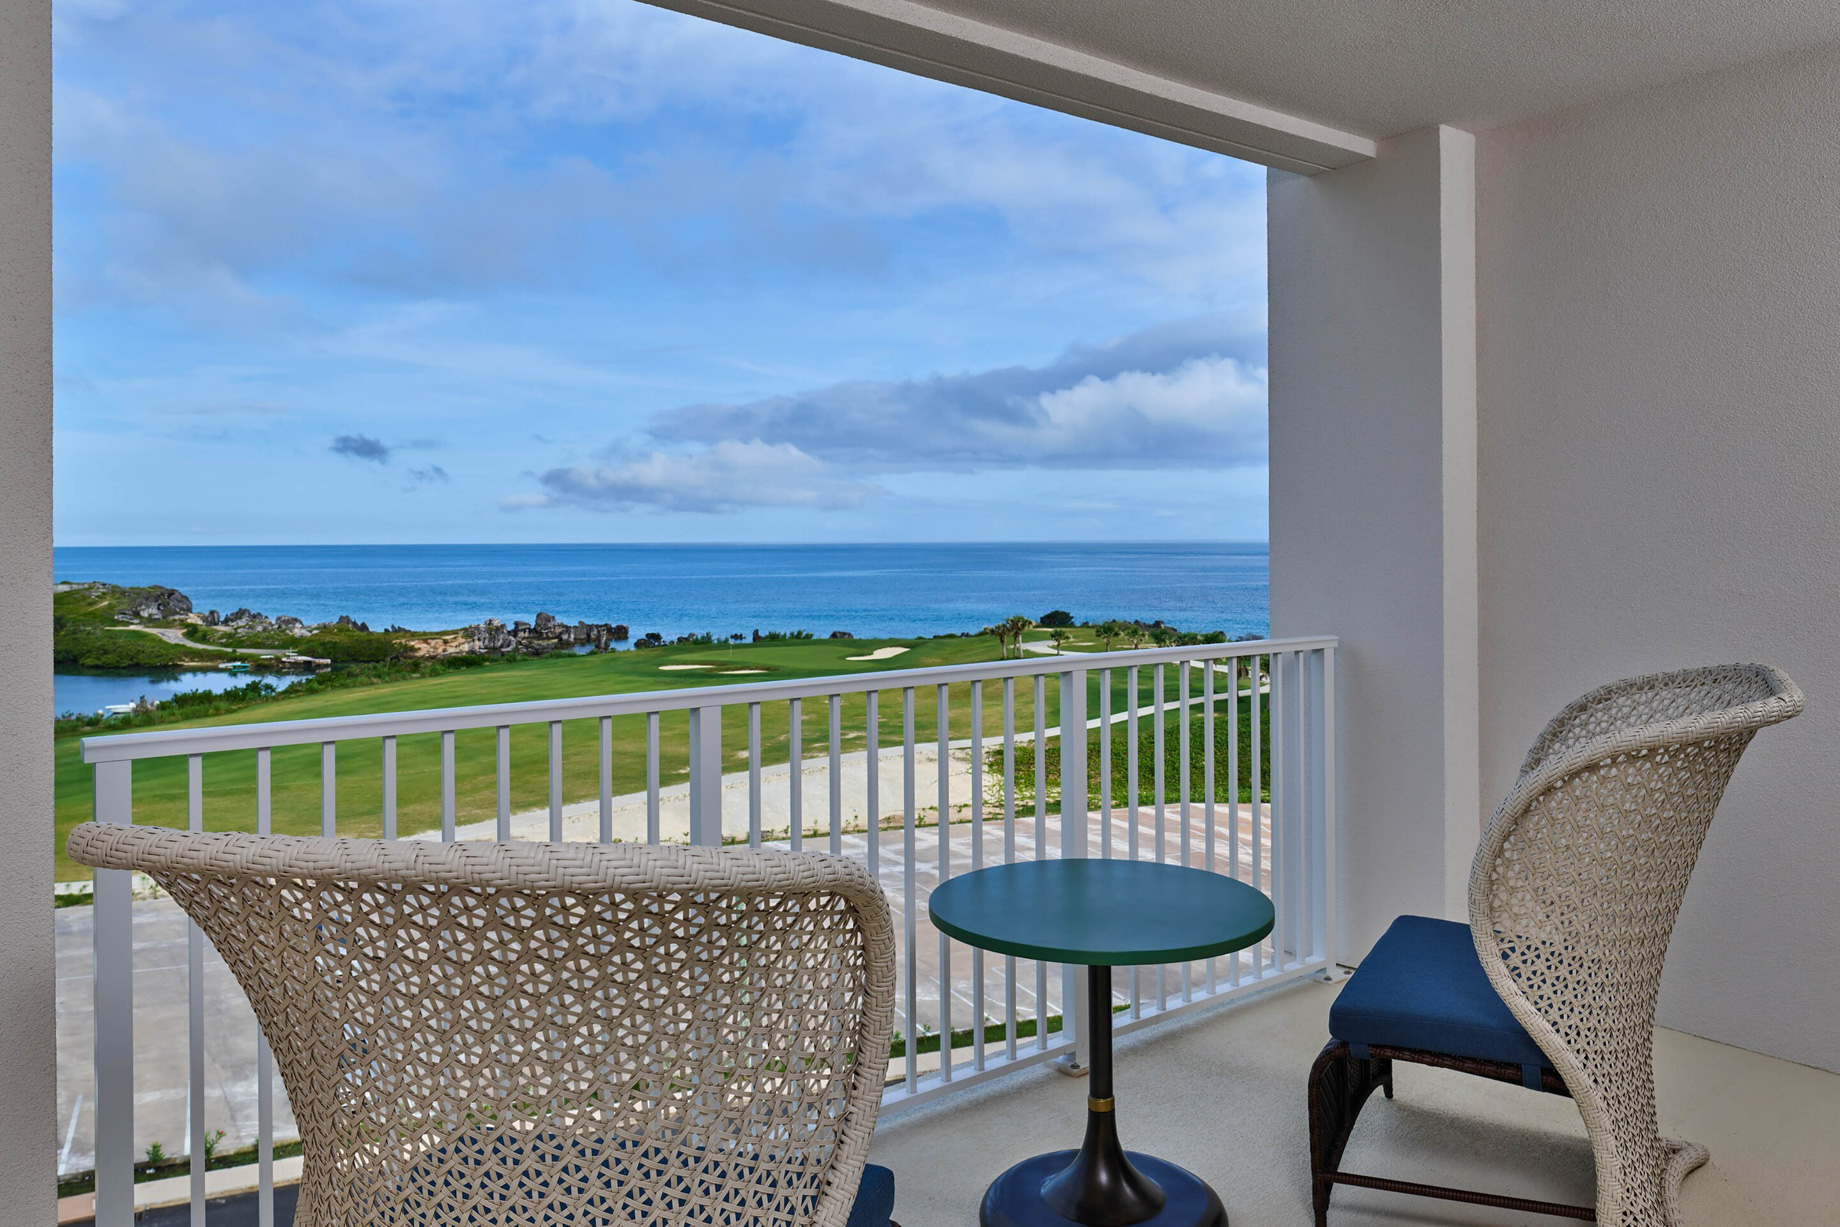 The St. Regis Bermuda Resort - St George's, Bermuda - Partial Ocean View King Balcony